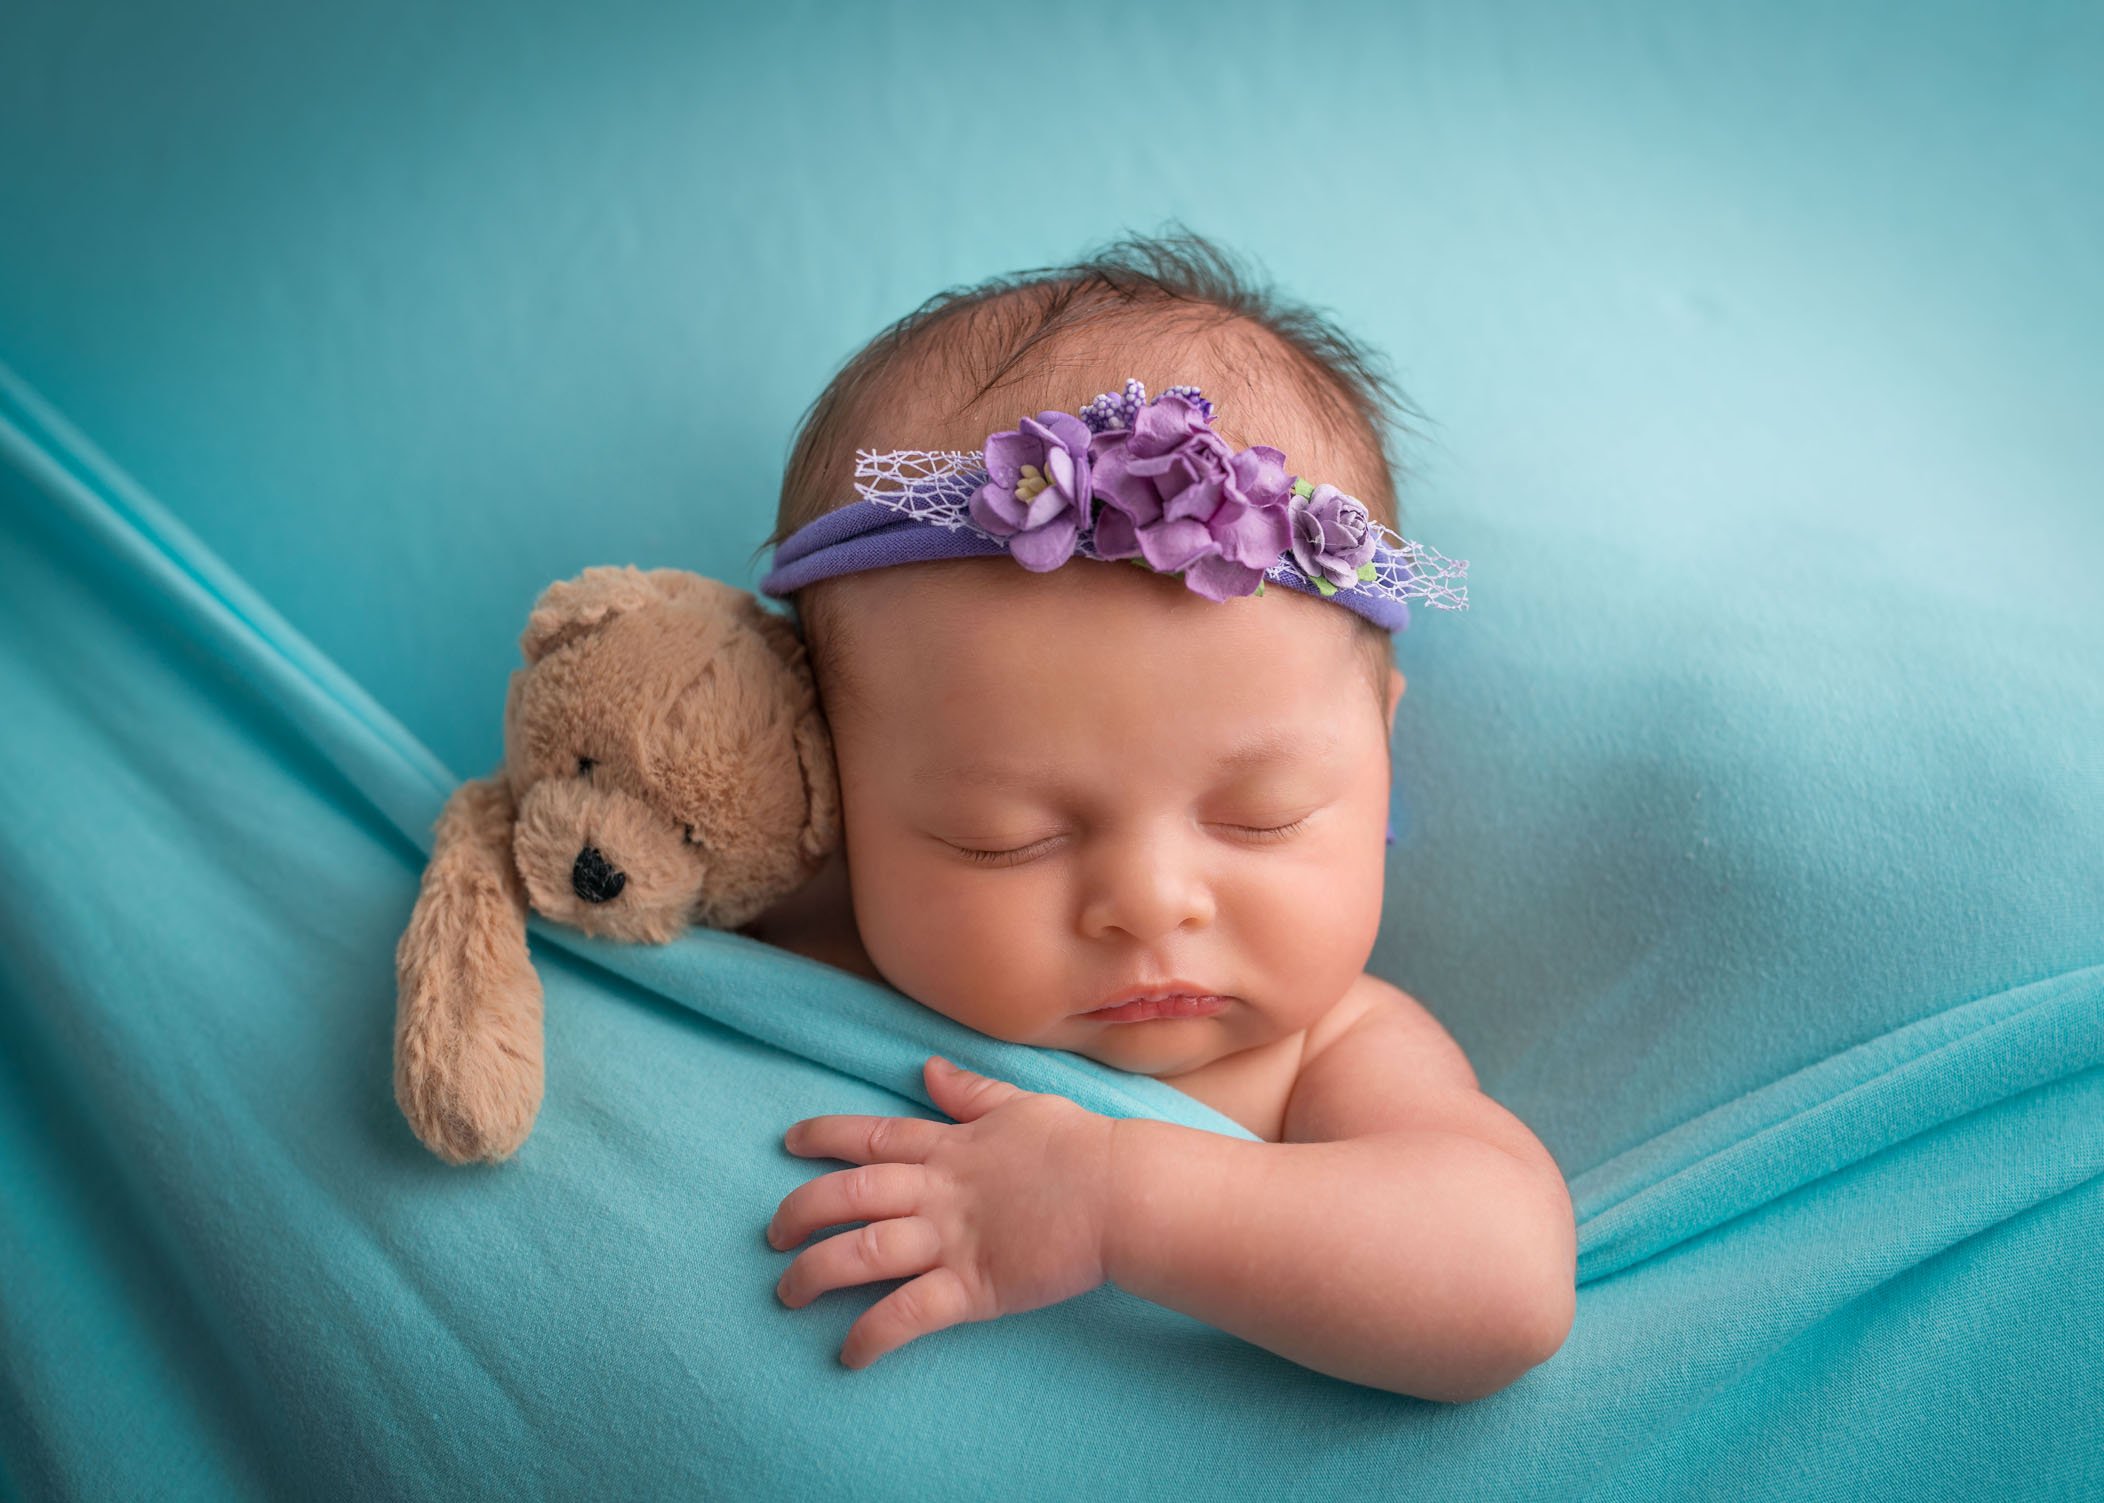 newborn baby girl sleeping on teal blue with her teddy bear